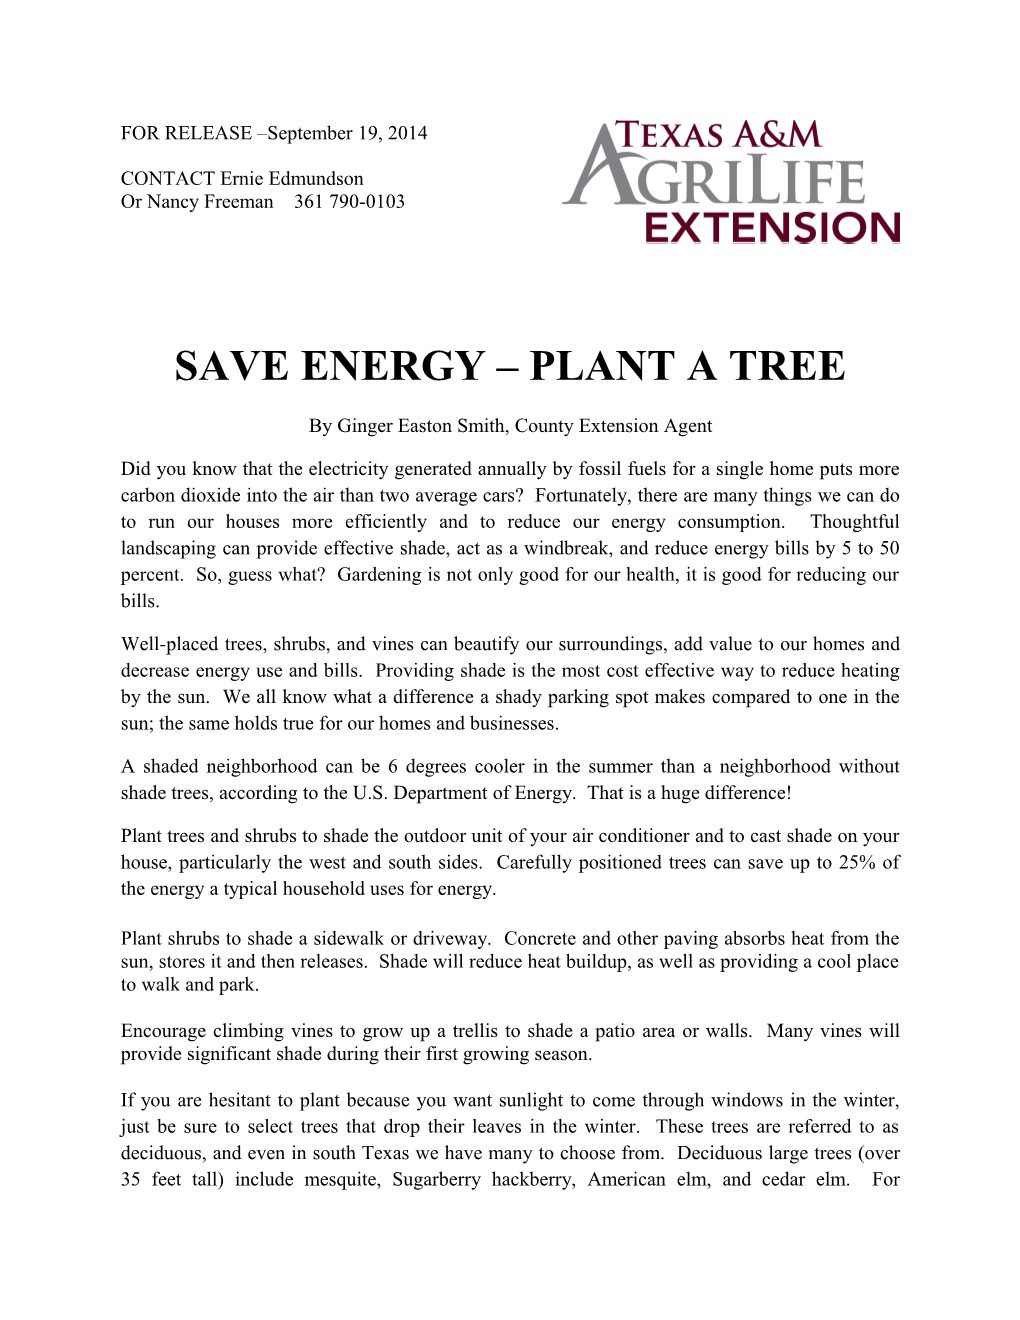 Save Energy Plant a Tree